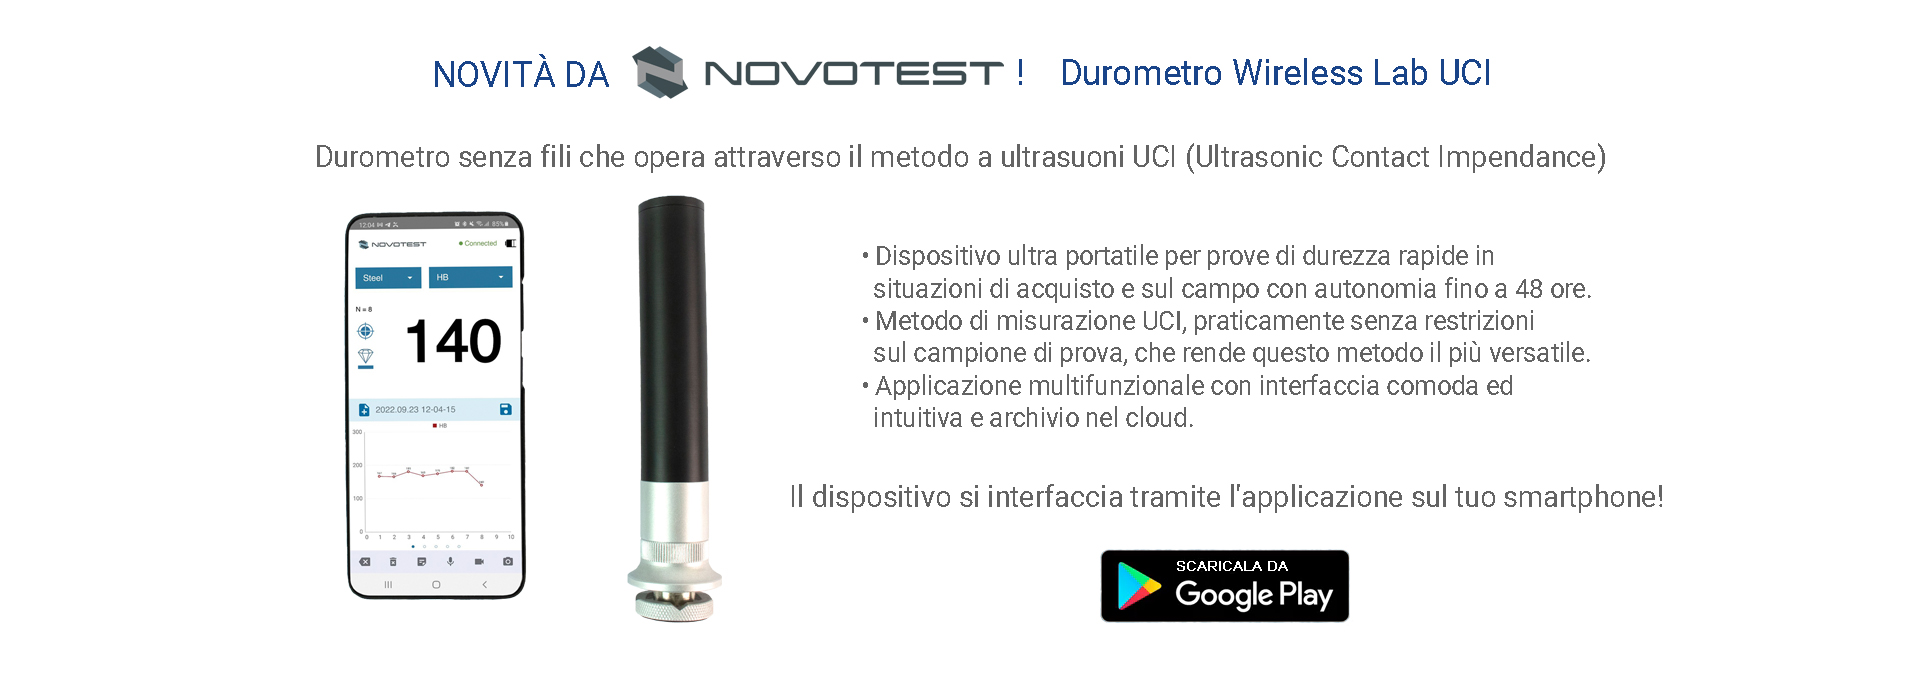 Durometro wireless Lab UCI